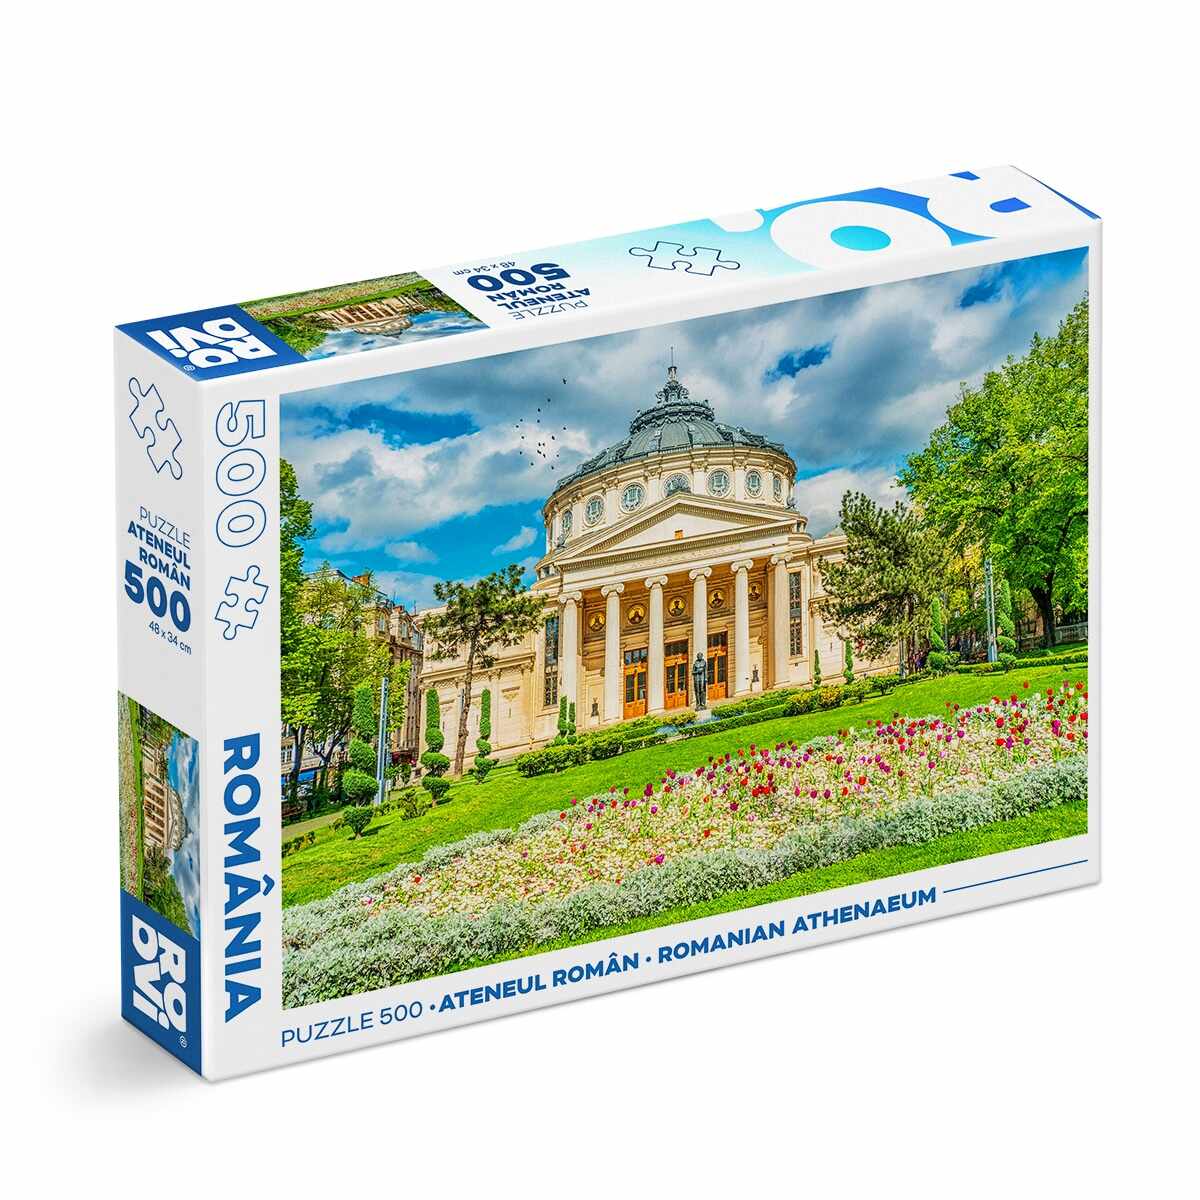 Puzzle Ateneul Român - Puzzle 500 Piese cu Imagini din România